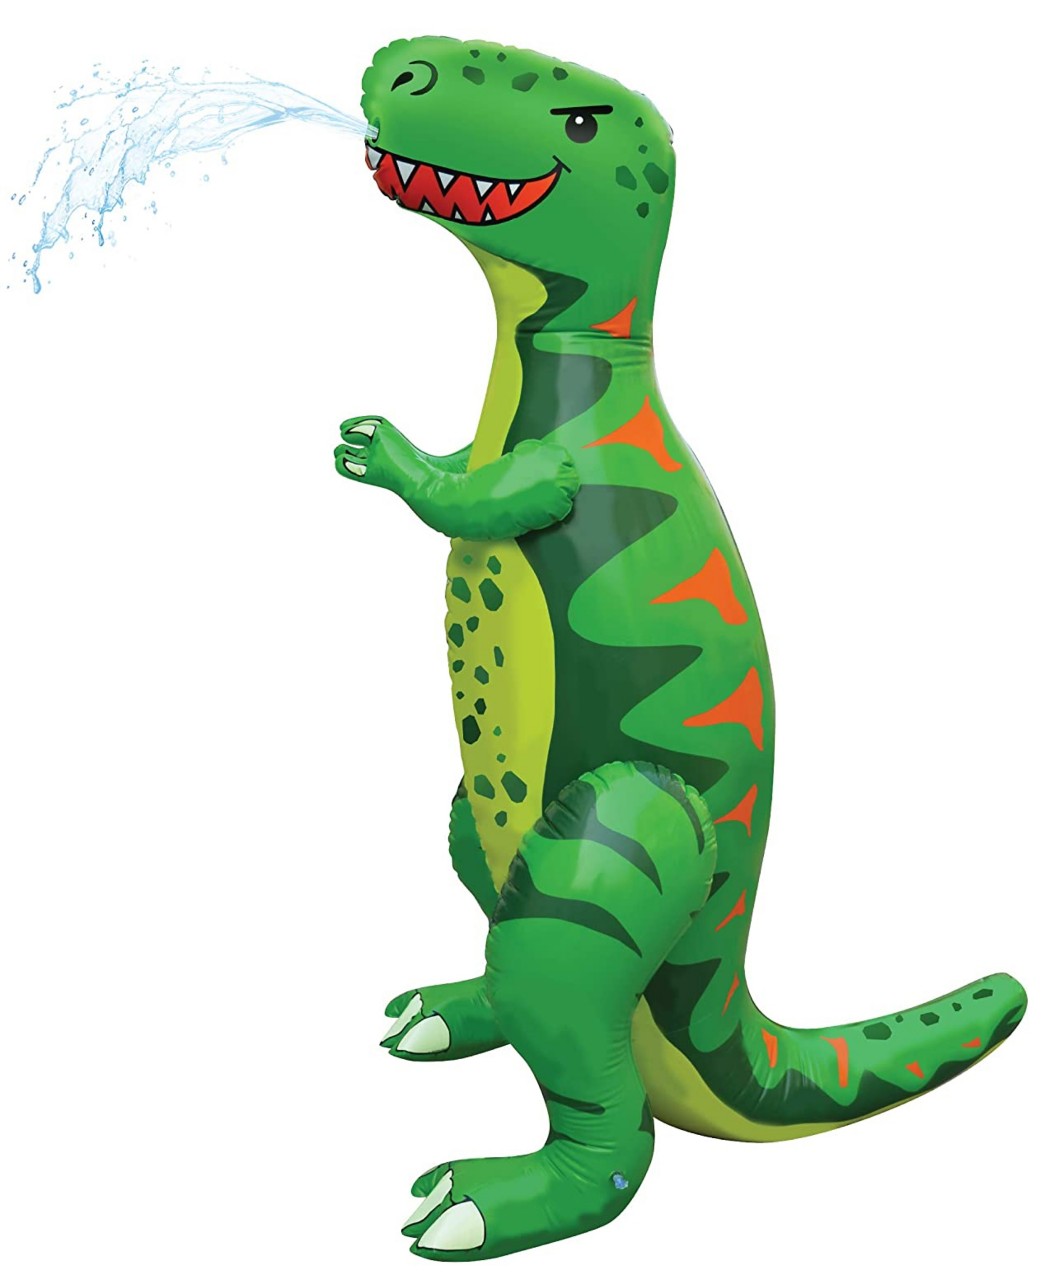 Image an inflatable dinosaur sprinkler.